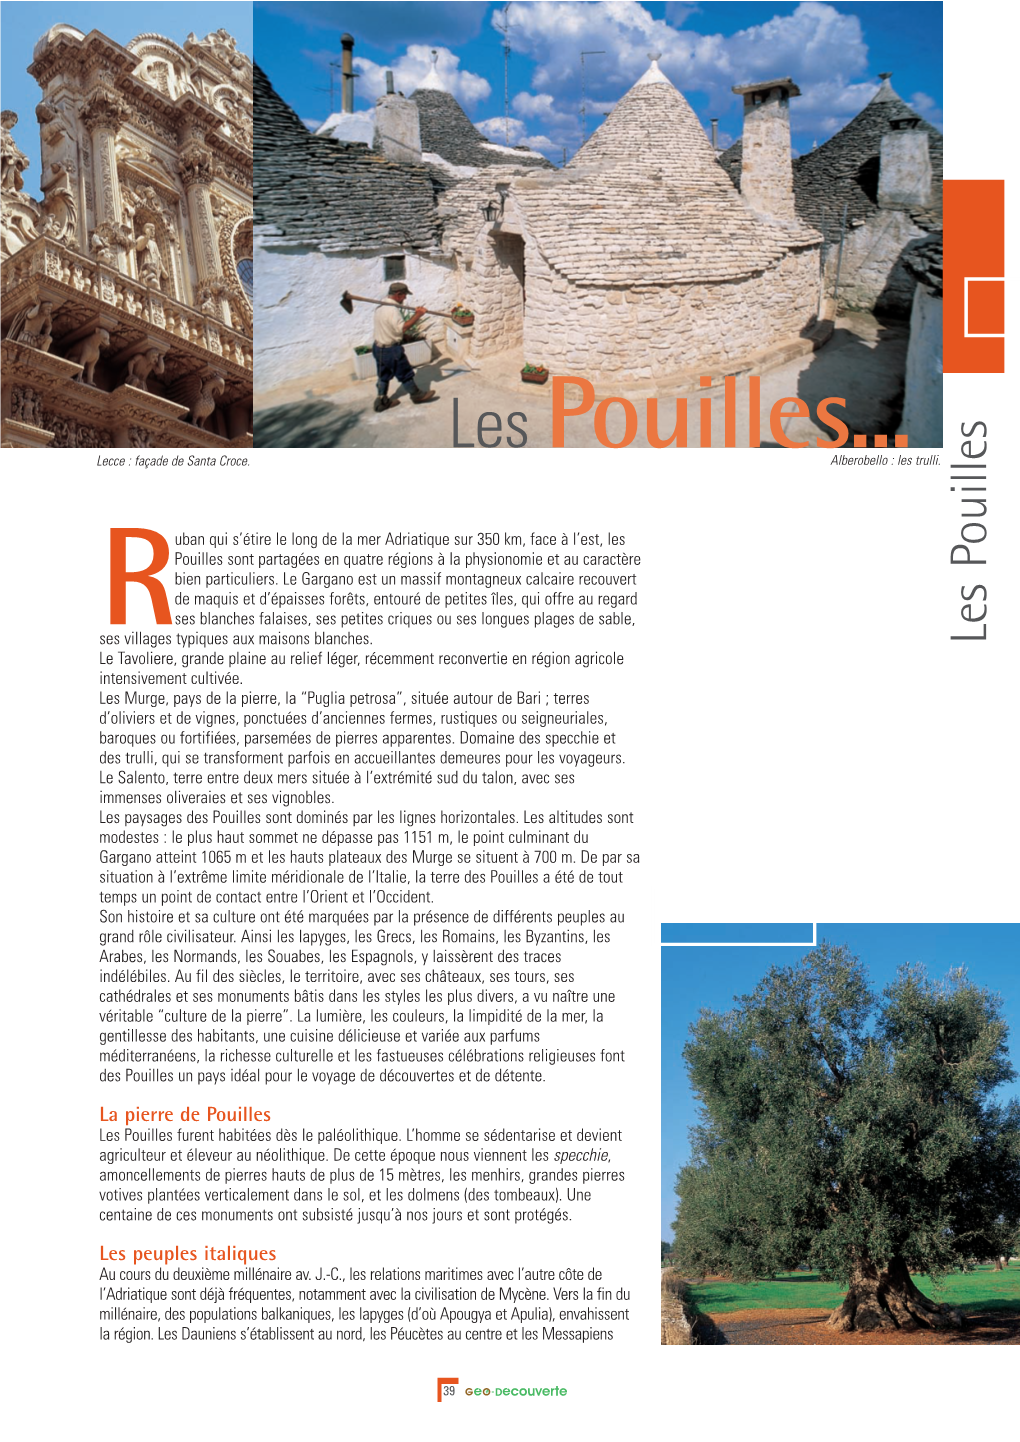 Les Pouilles...Alberobello : Les Trulli